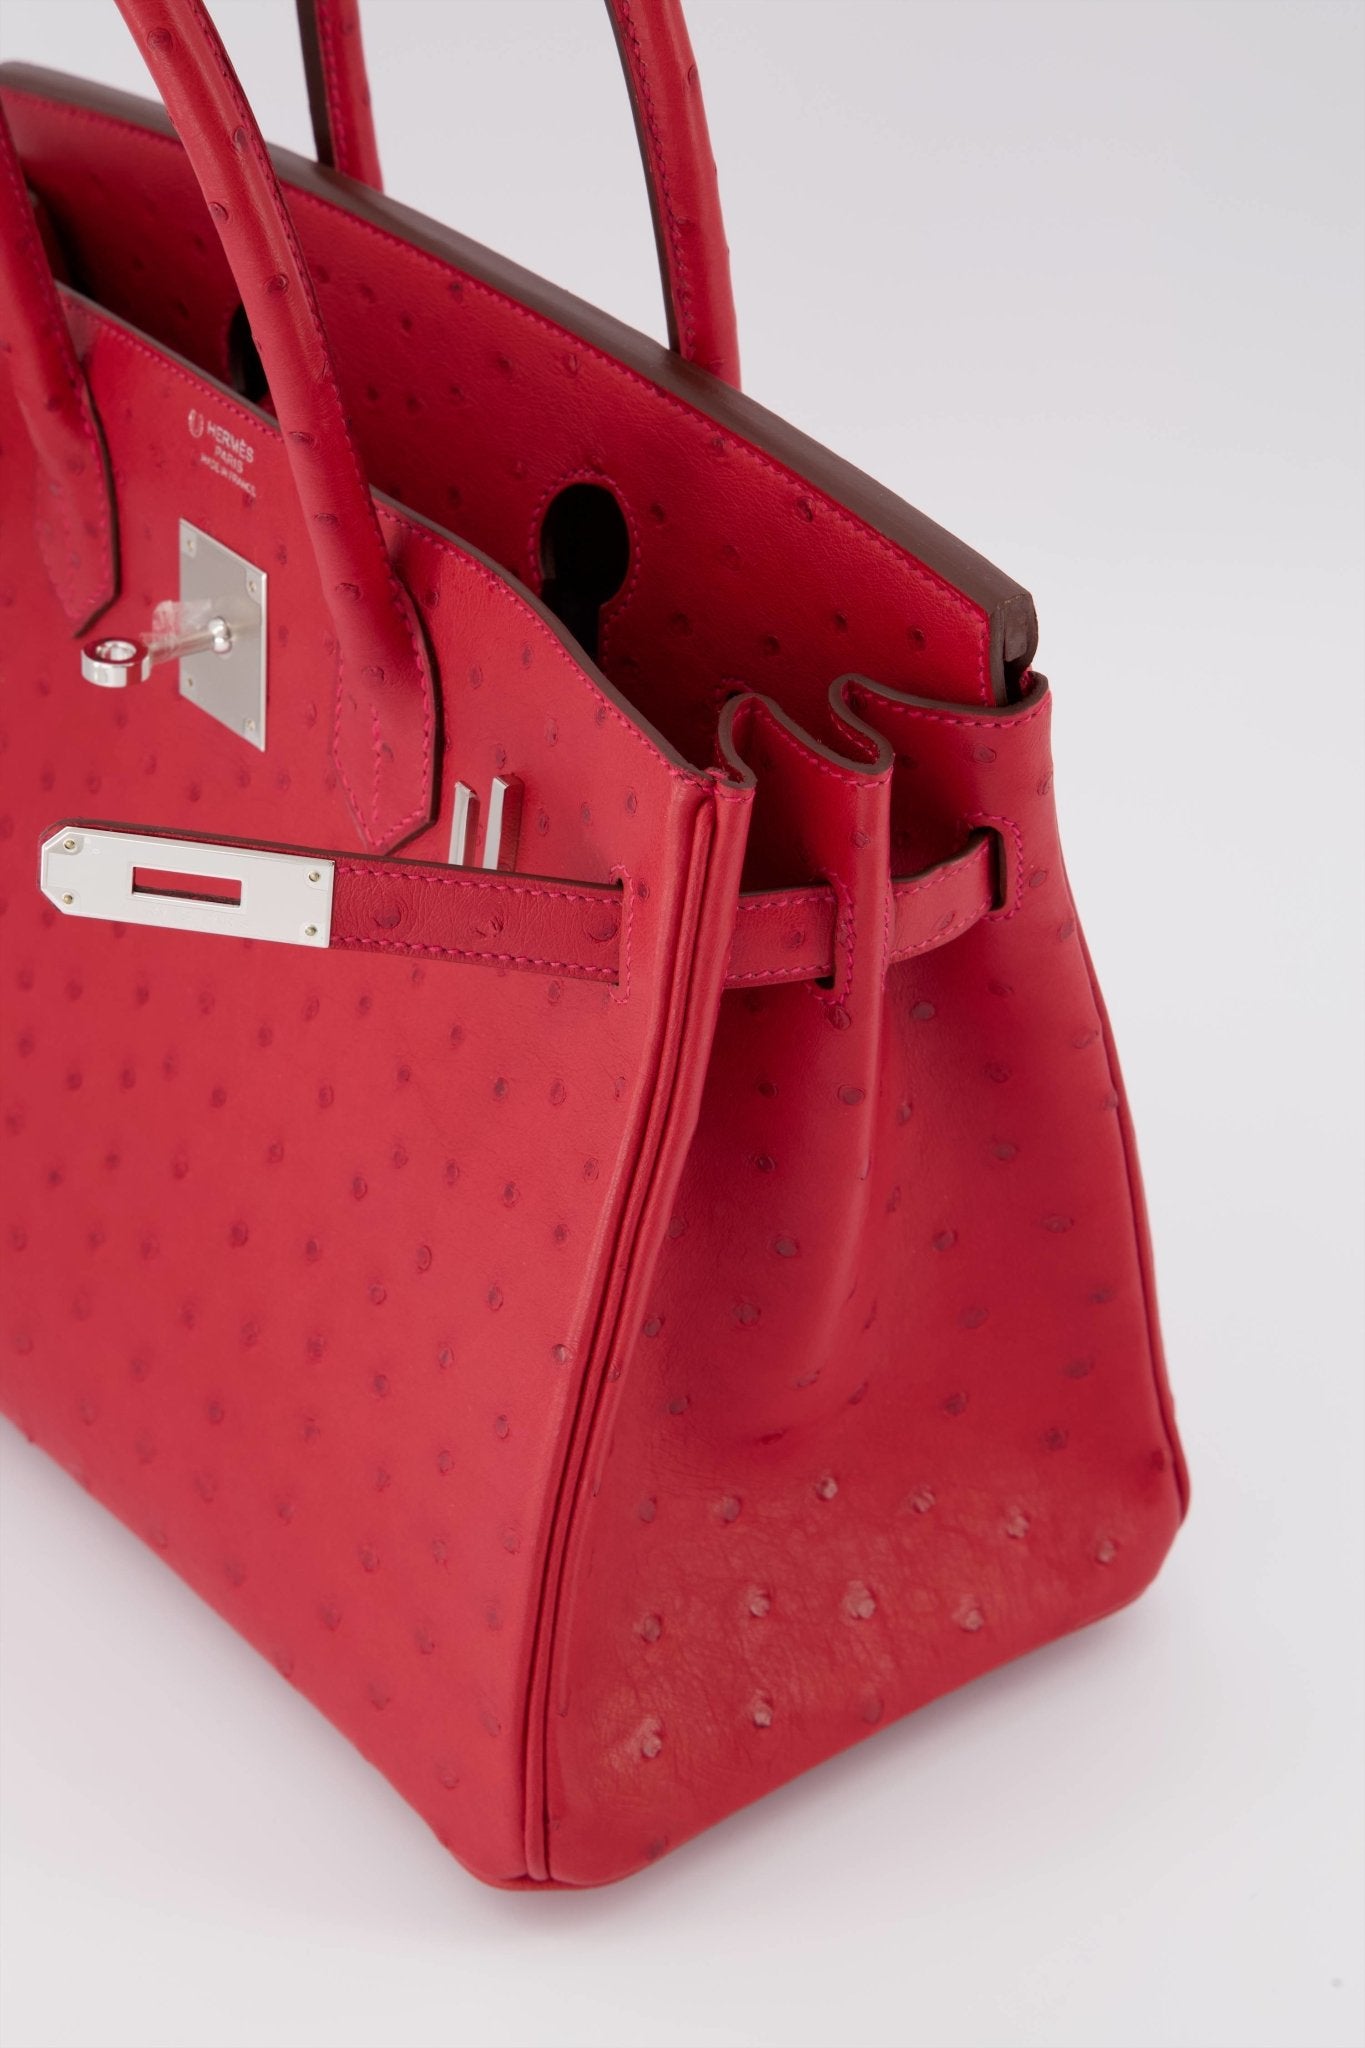 *Rare* Hermes Birkin 30 Handbag Rouge Vif Special Order Ostrich Leather With Palladium Hardware. Investment Piece